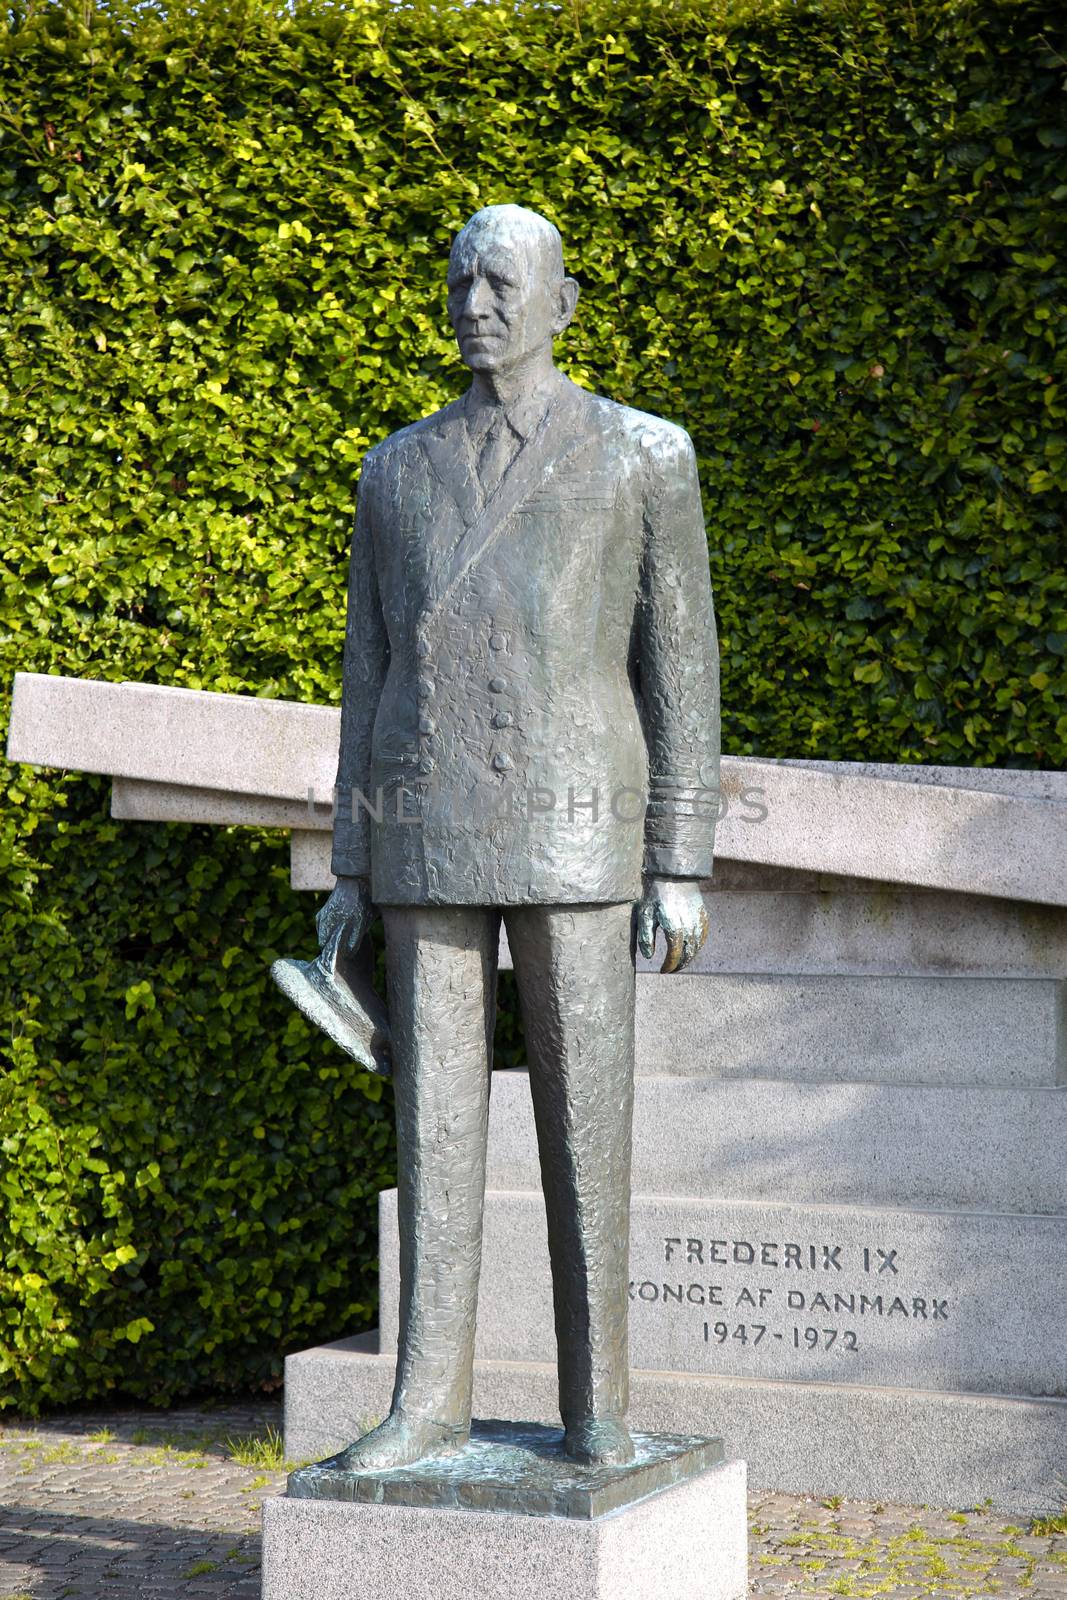 Statue of Frederick IX, King of Denmark in Copenhagen, Denmark by vladacanon